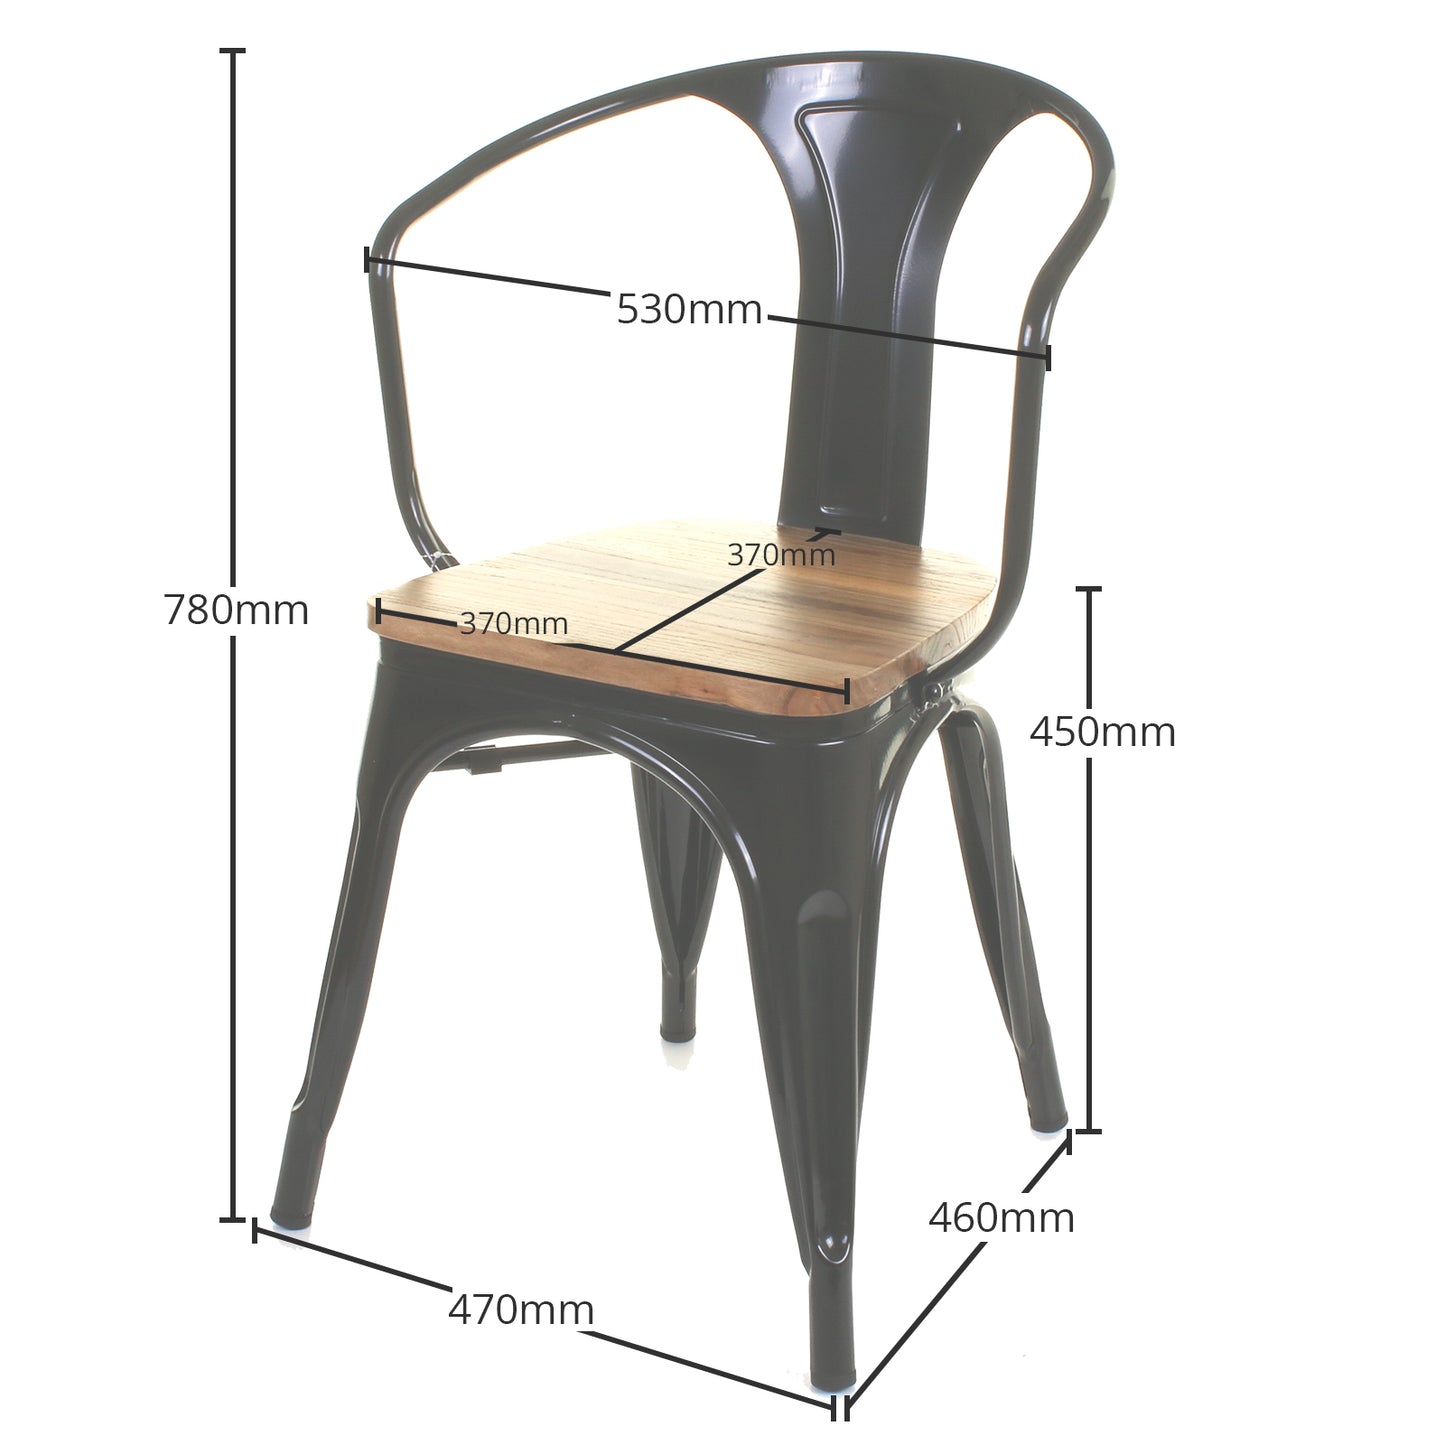 4PC Prato Table, 2 Florence Chairs & Sicily Bench Set - Onyx Matt Black